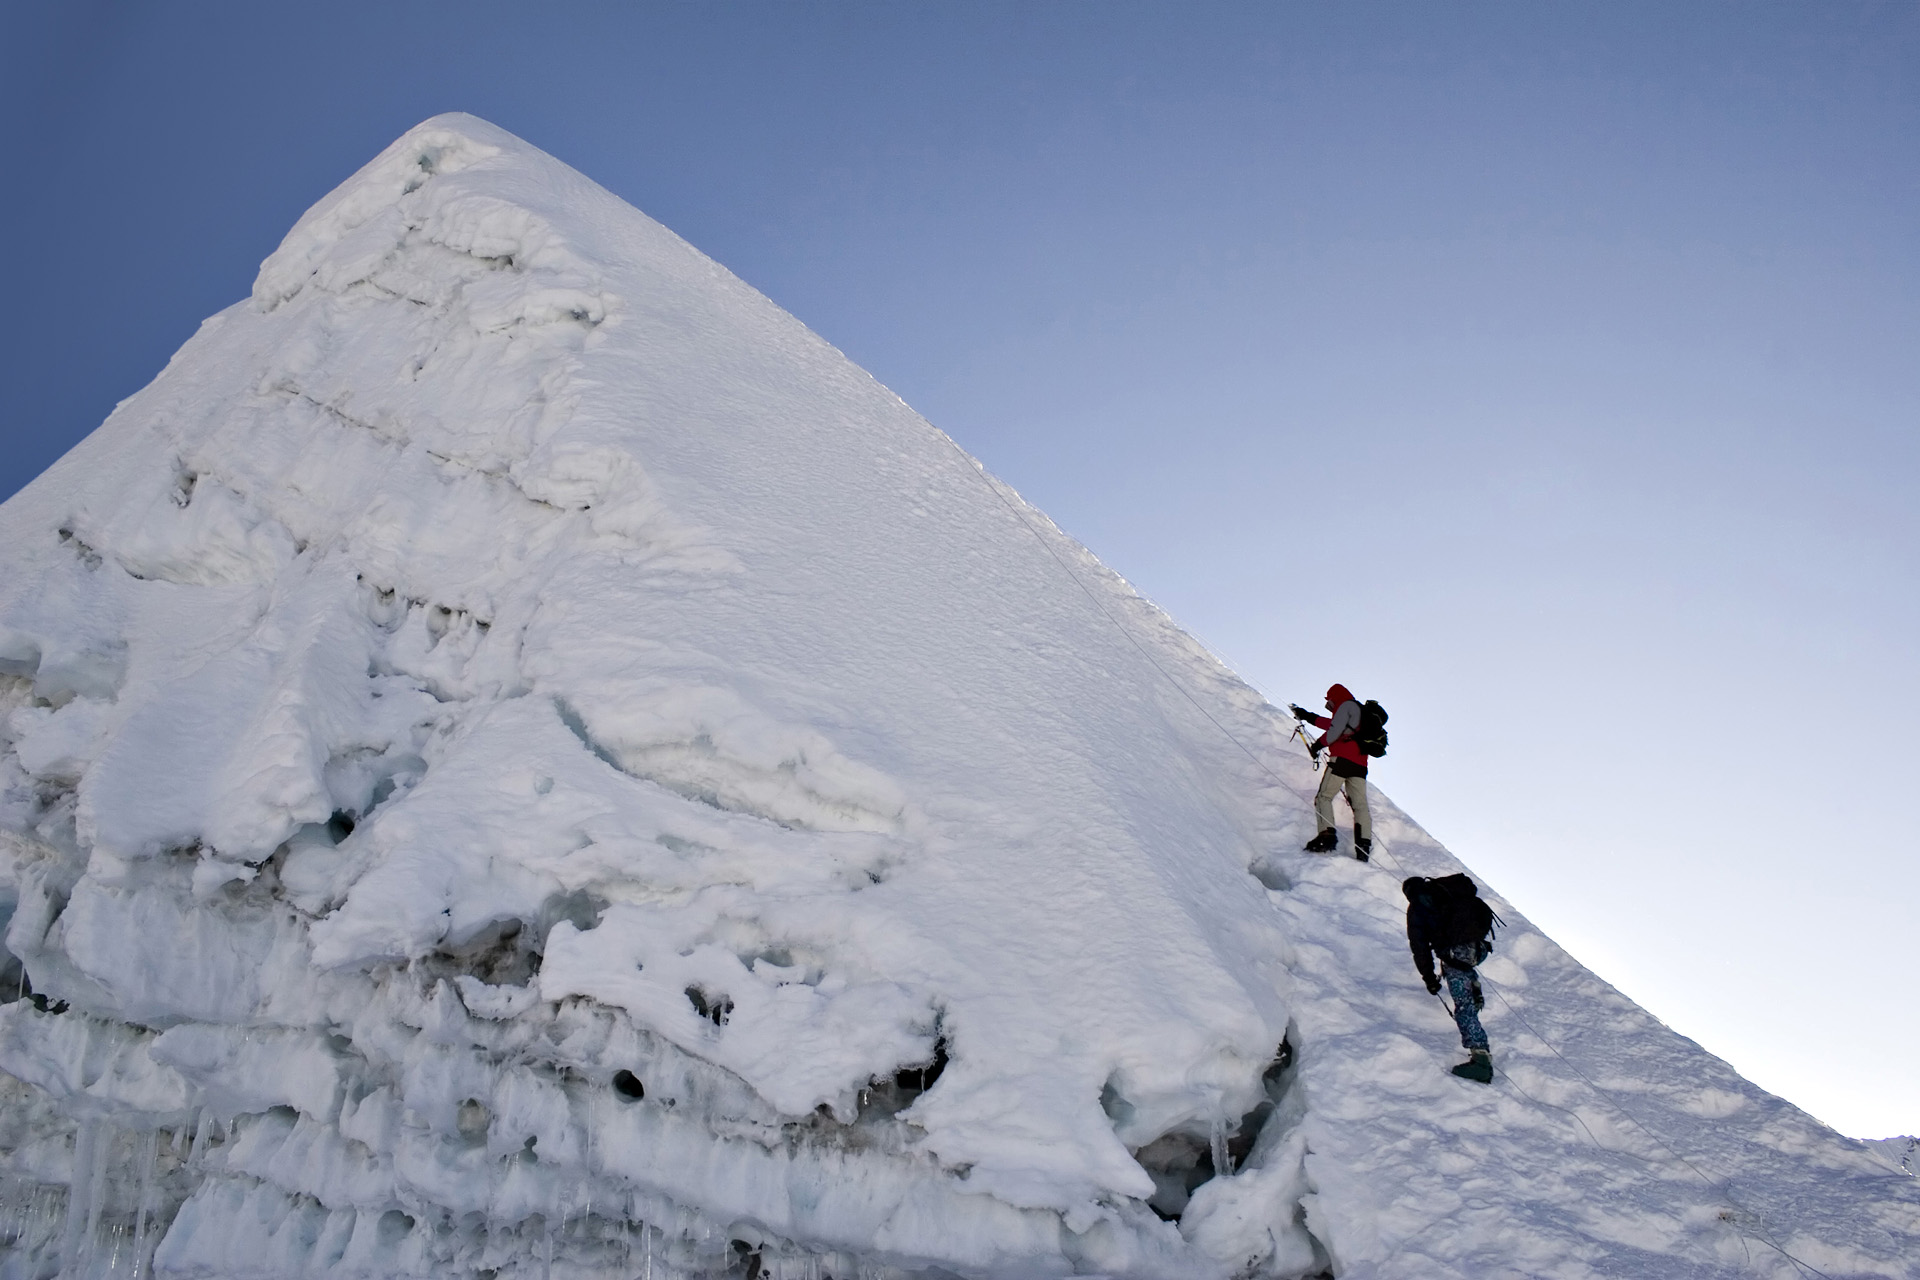 Expeditie trektocht Island Peak 6189m Imja Tse Nepal | Snow Leopard (1)